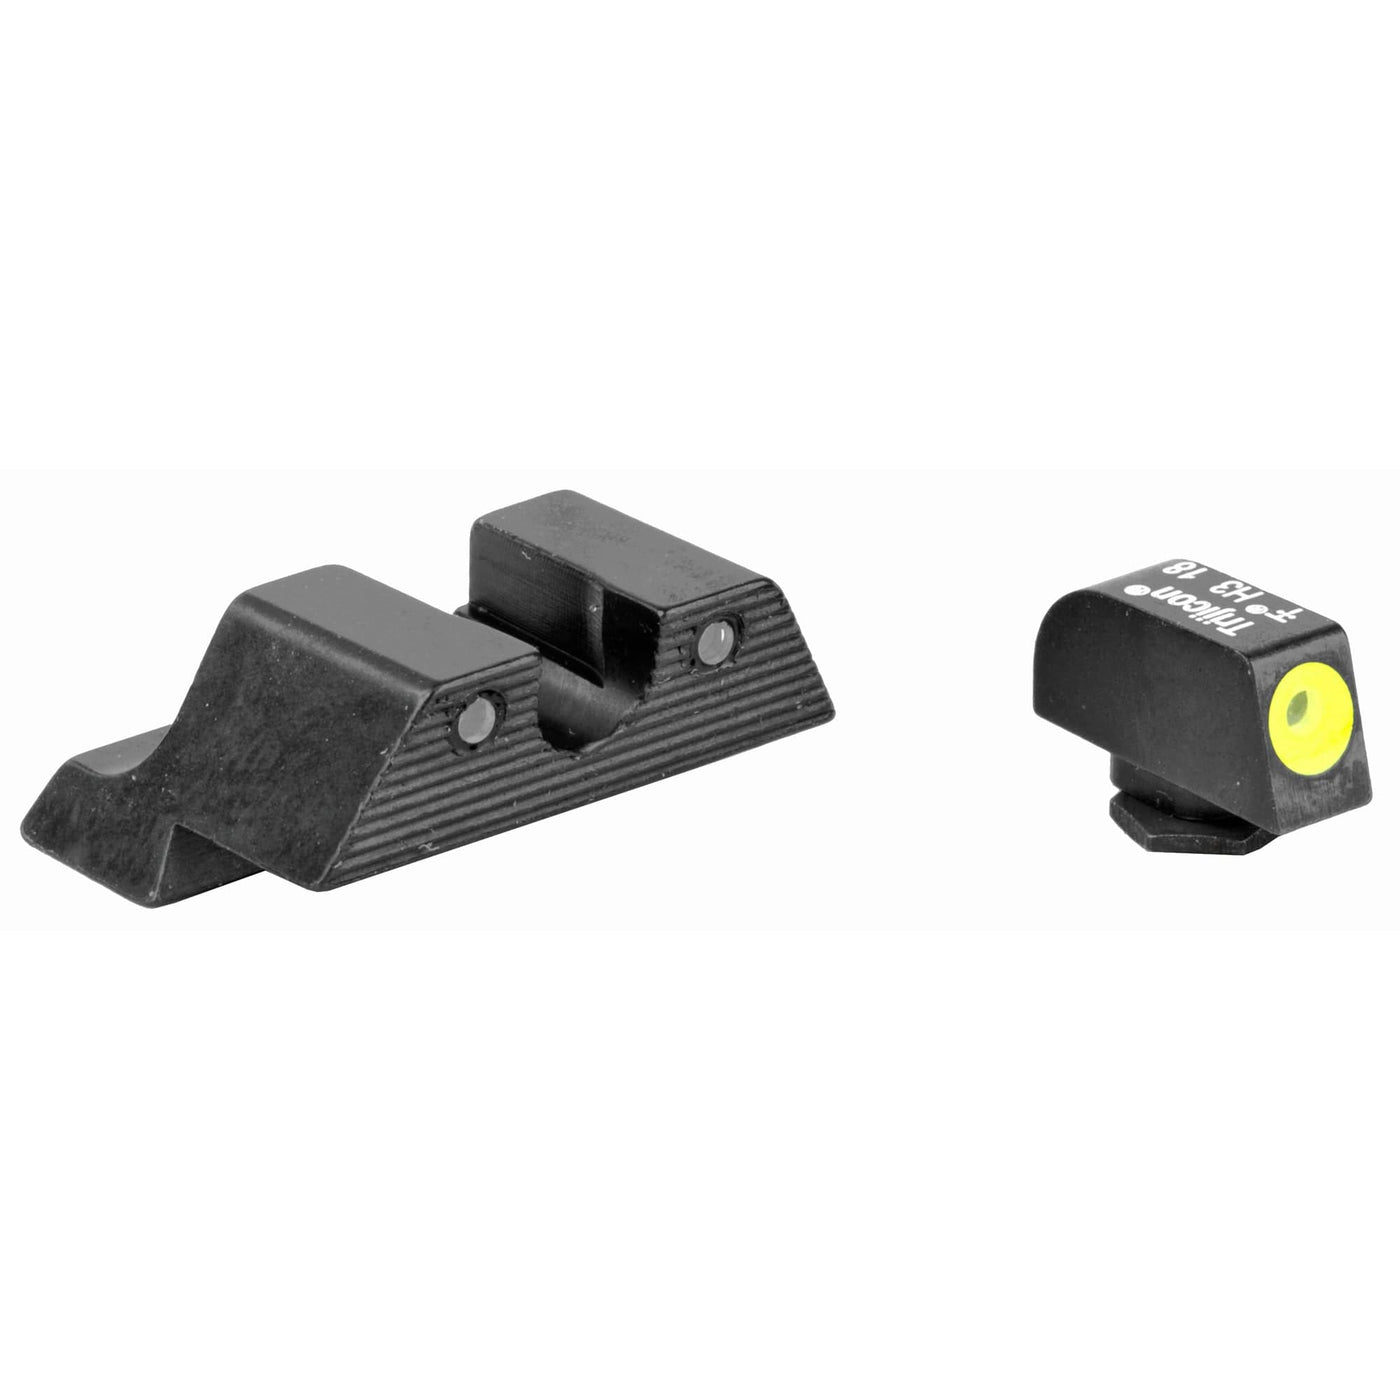 Trijicon Trijicon Night Sight Set Hd - Yellow Outline For Glock 21 Firearm Accessories